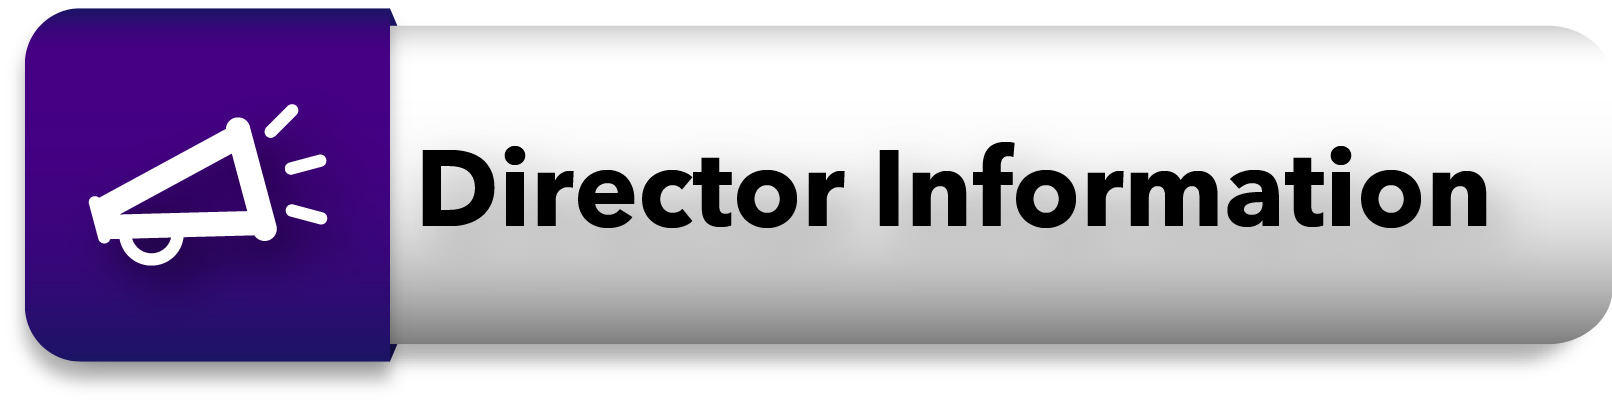 Director Information